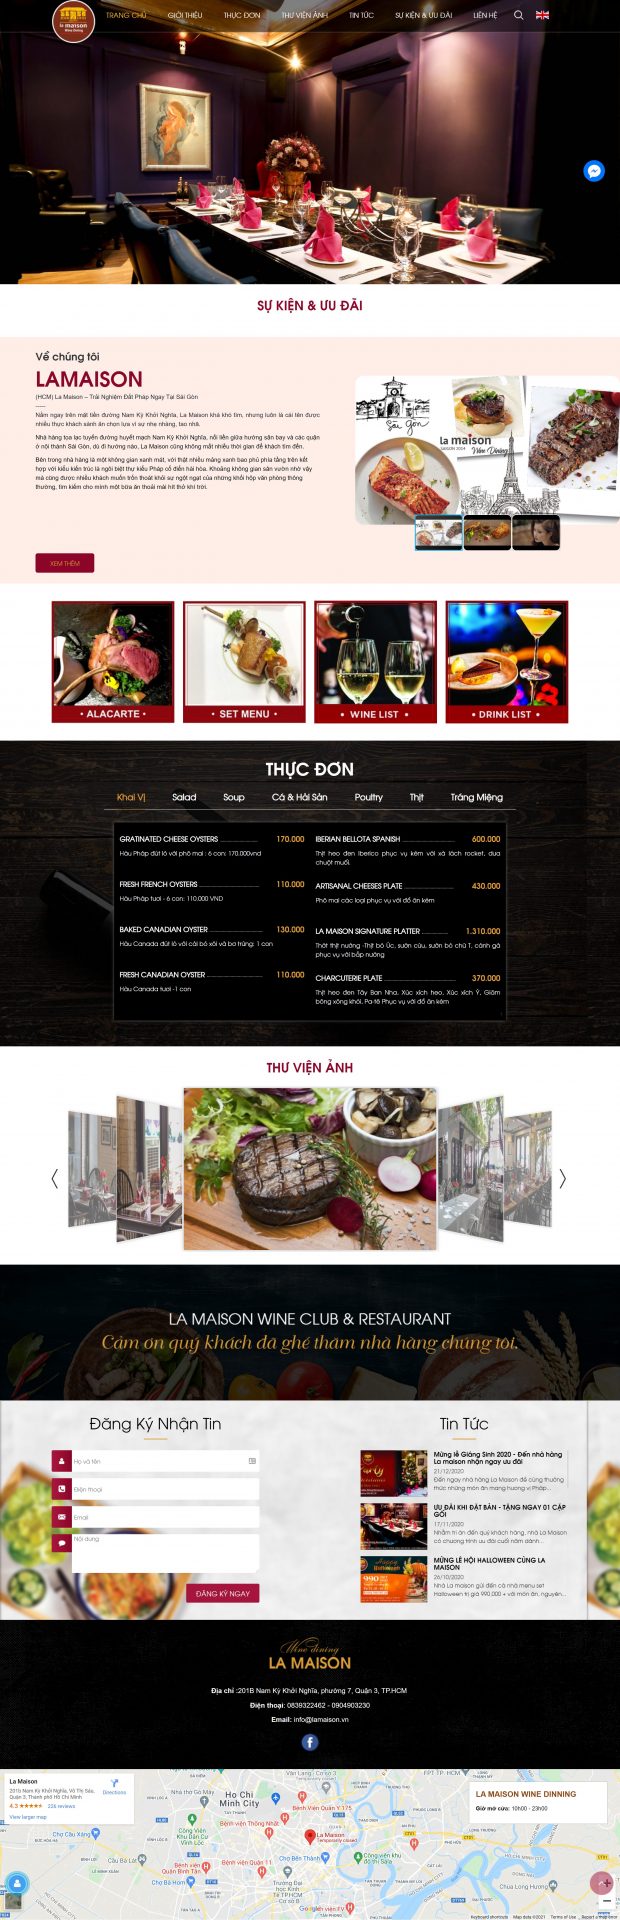 Mẫu website nhà hàng la maison